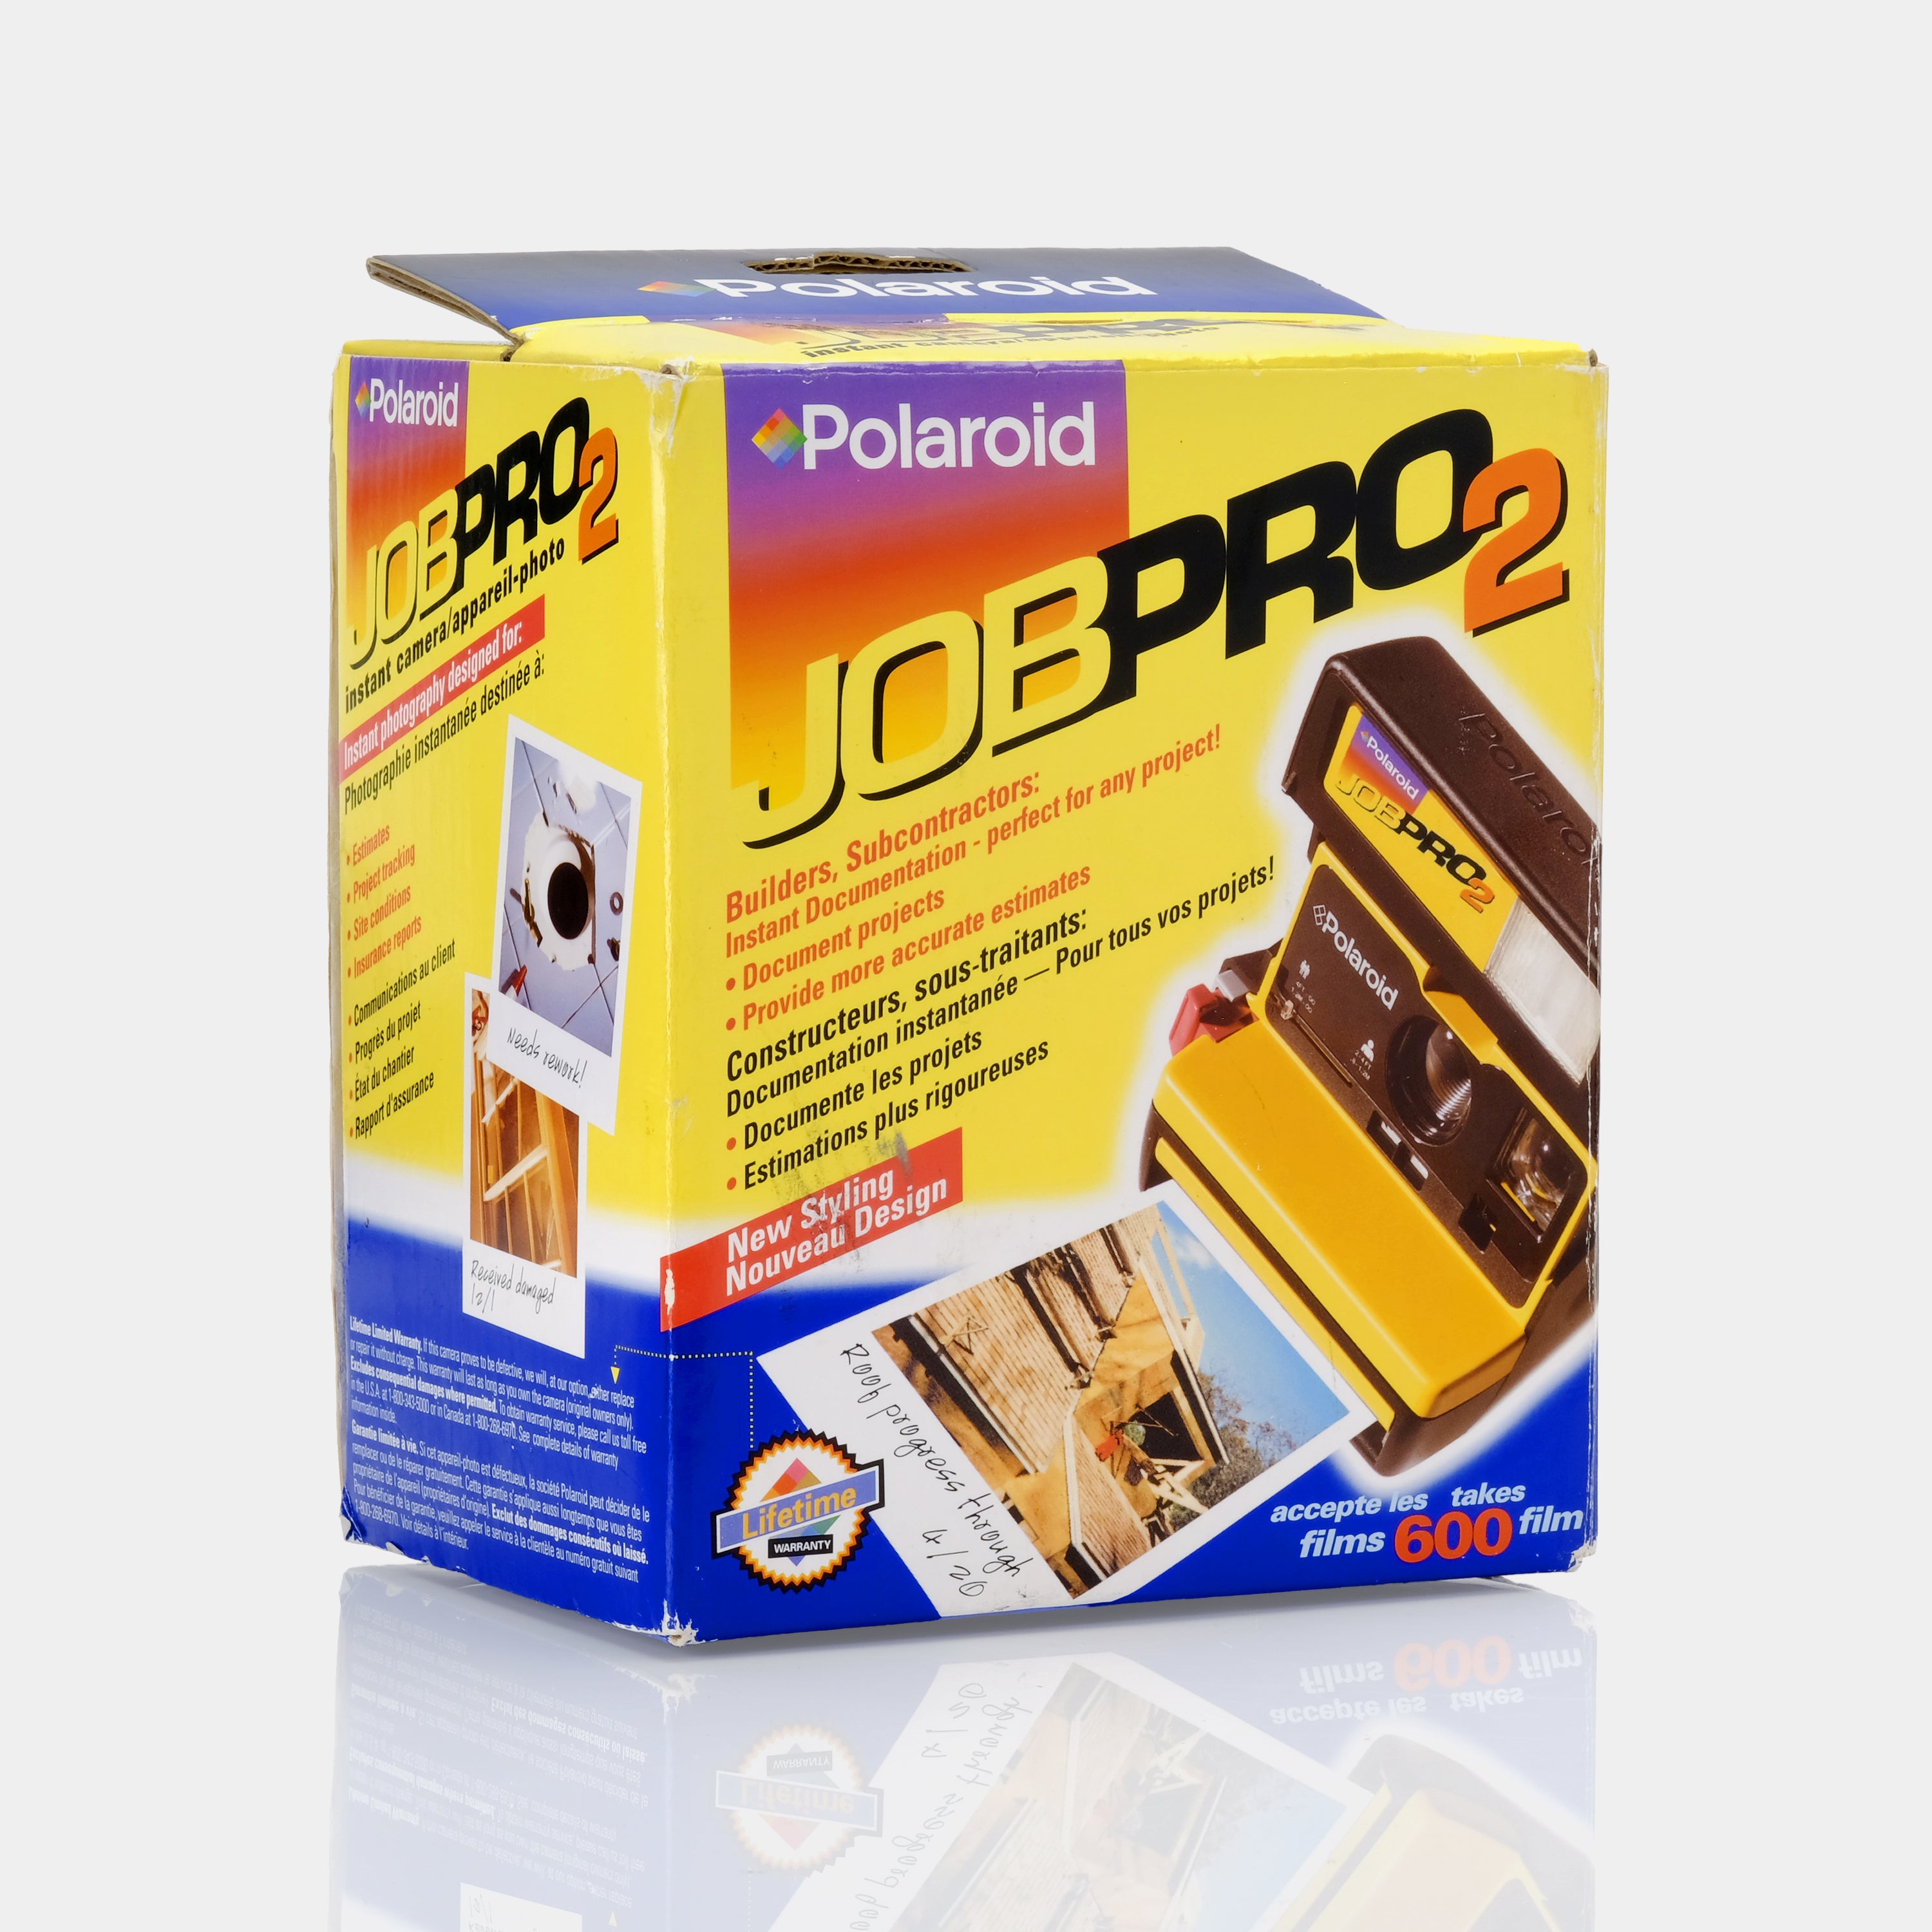 Polaroid 600 Job Pro 2 Instant Film Camera with Original Box and Manual